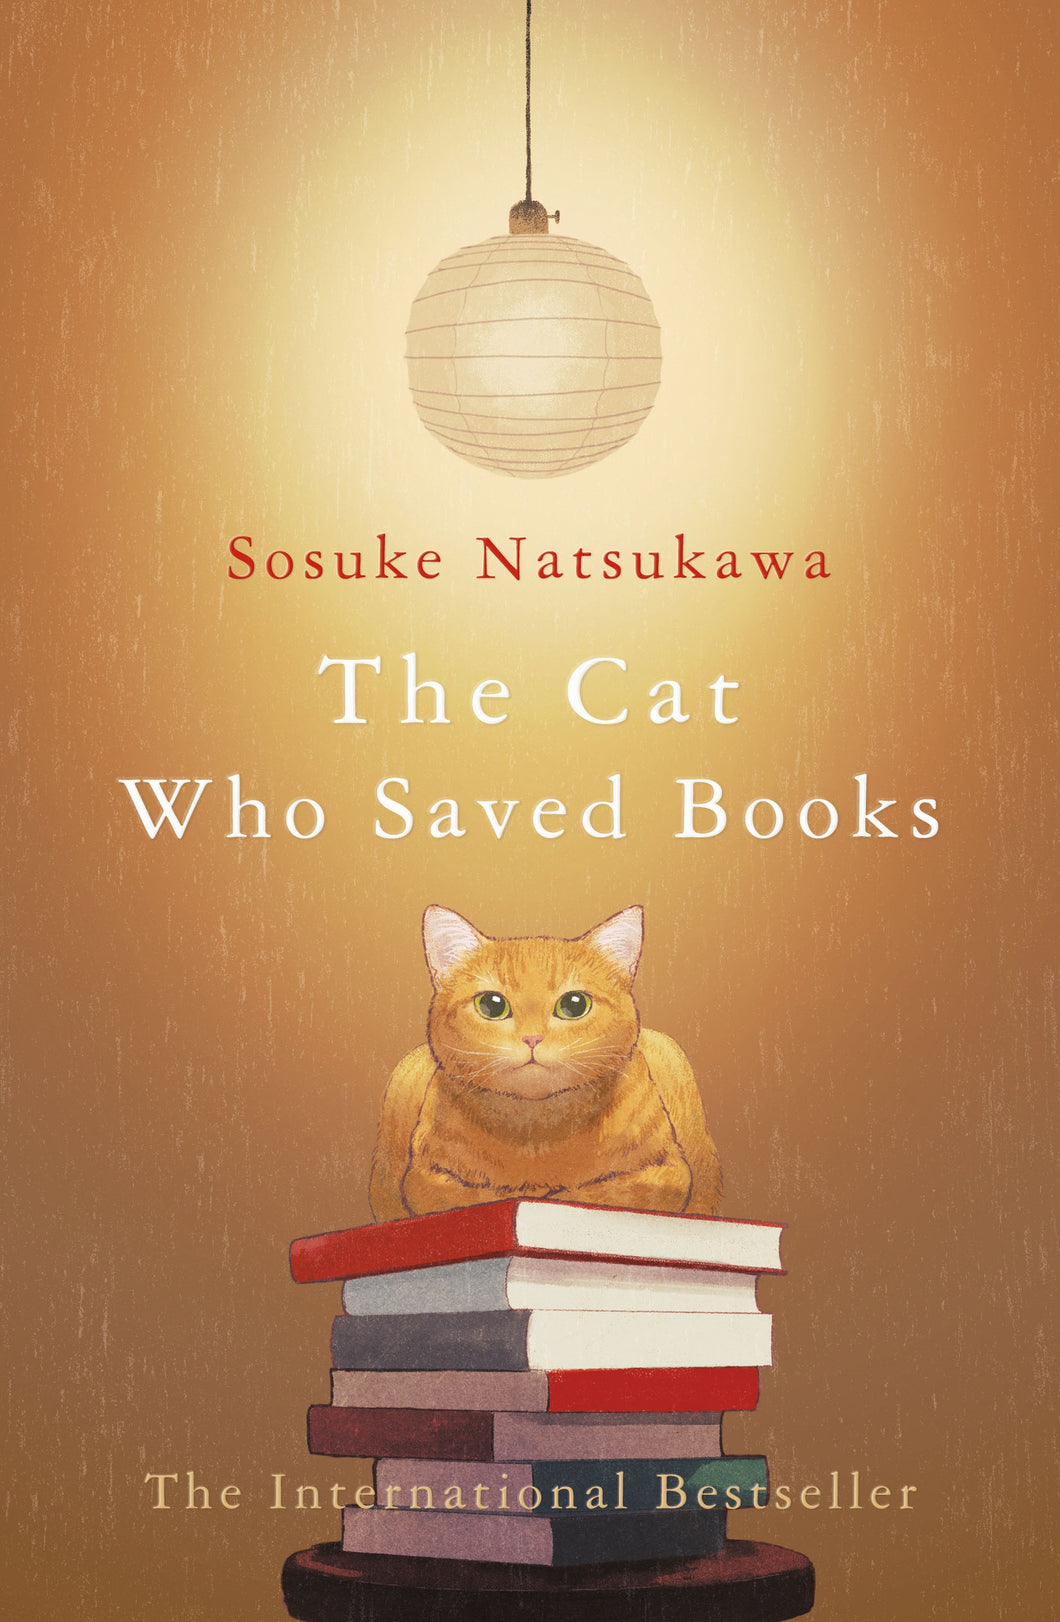 The Cat Who Saved Books by Sosuke Natukawa.